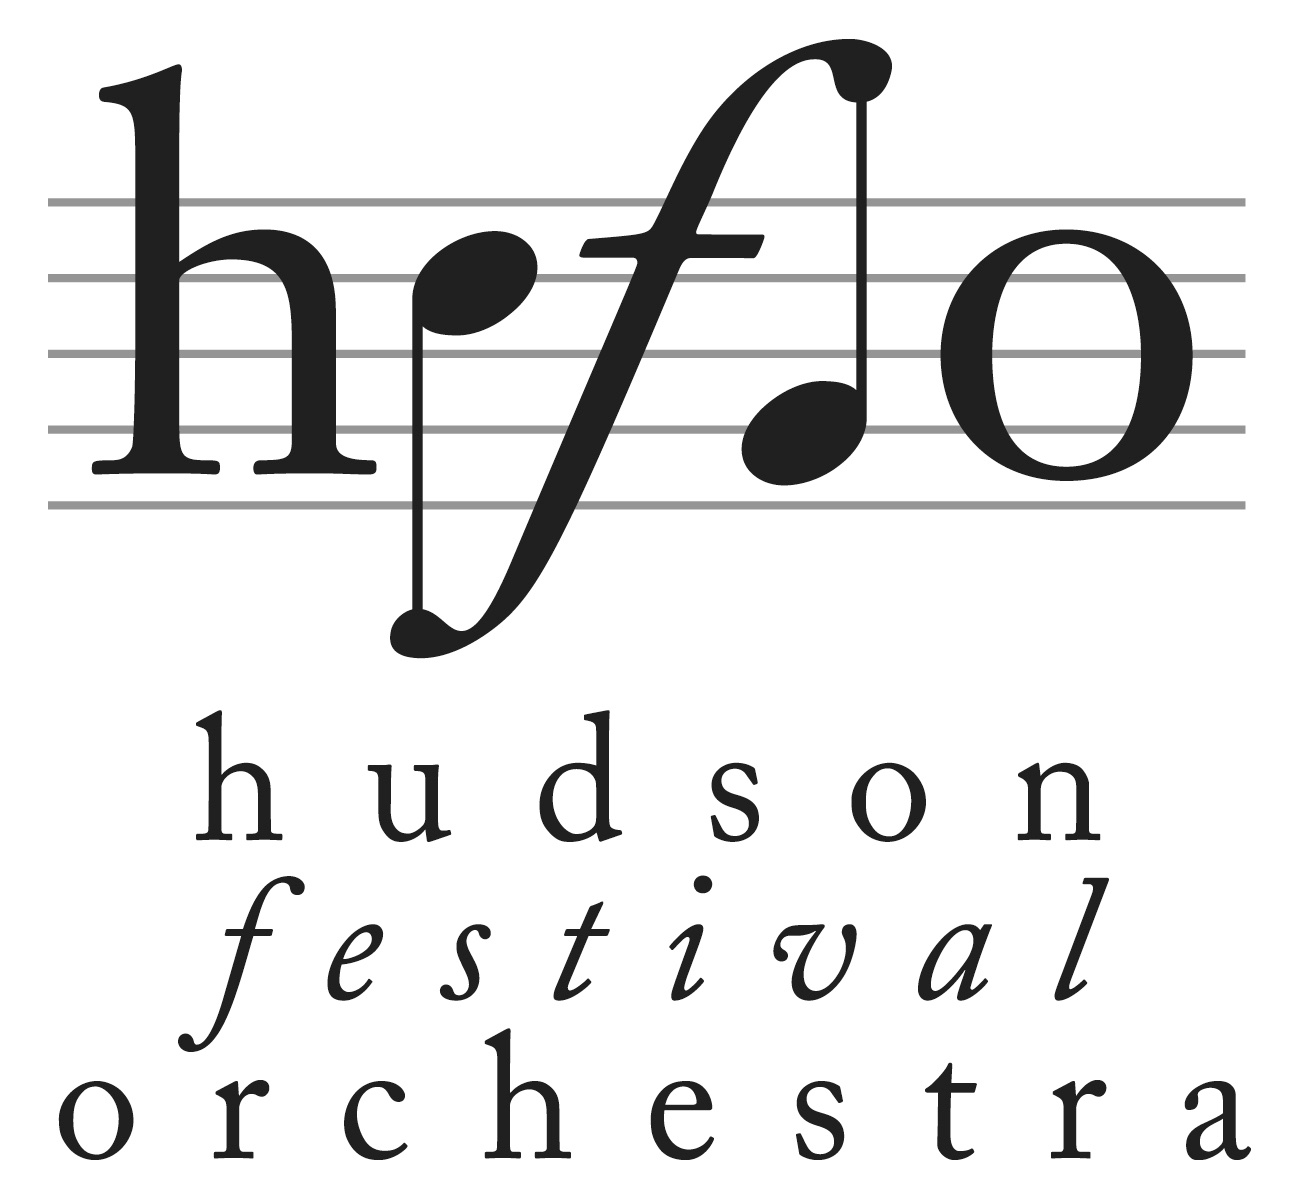 Hudson Festival Orchestra